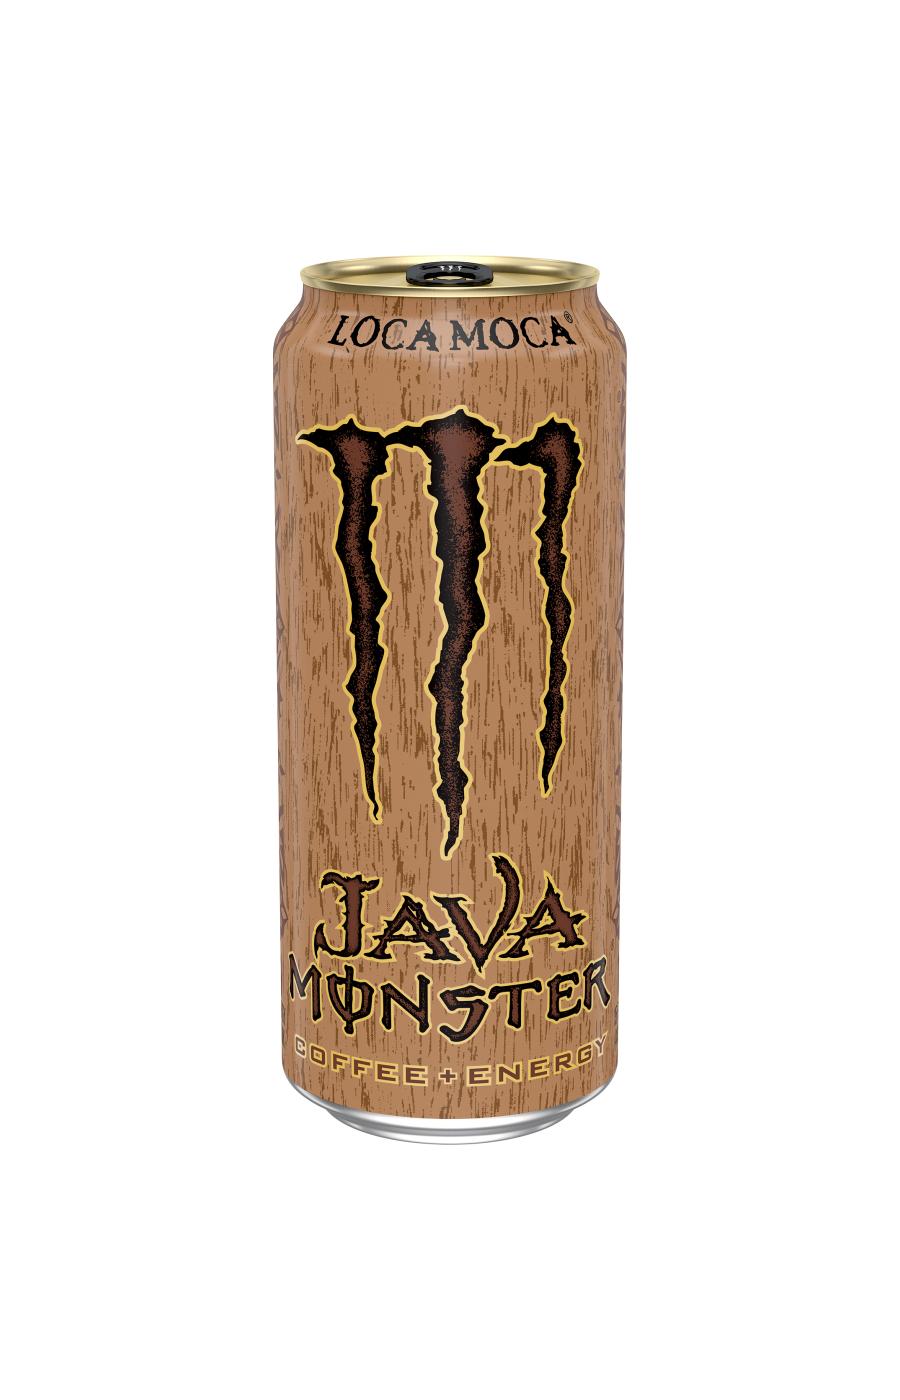 Monster Energy Java Monster Loca Moca, Coffee + Energy; image 1 of 2